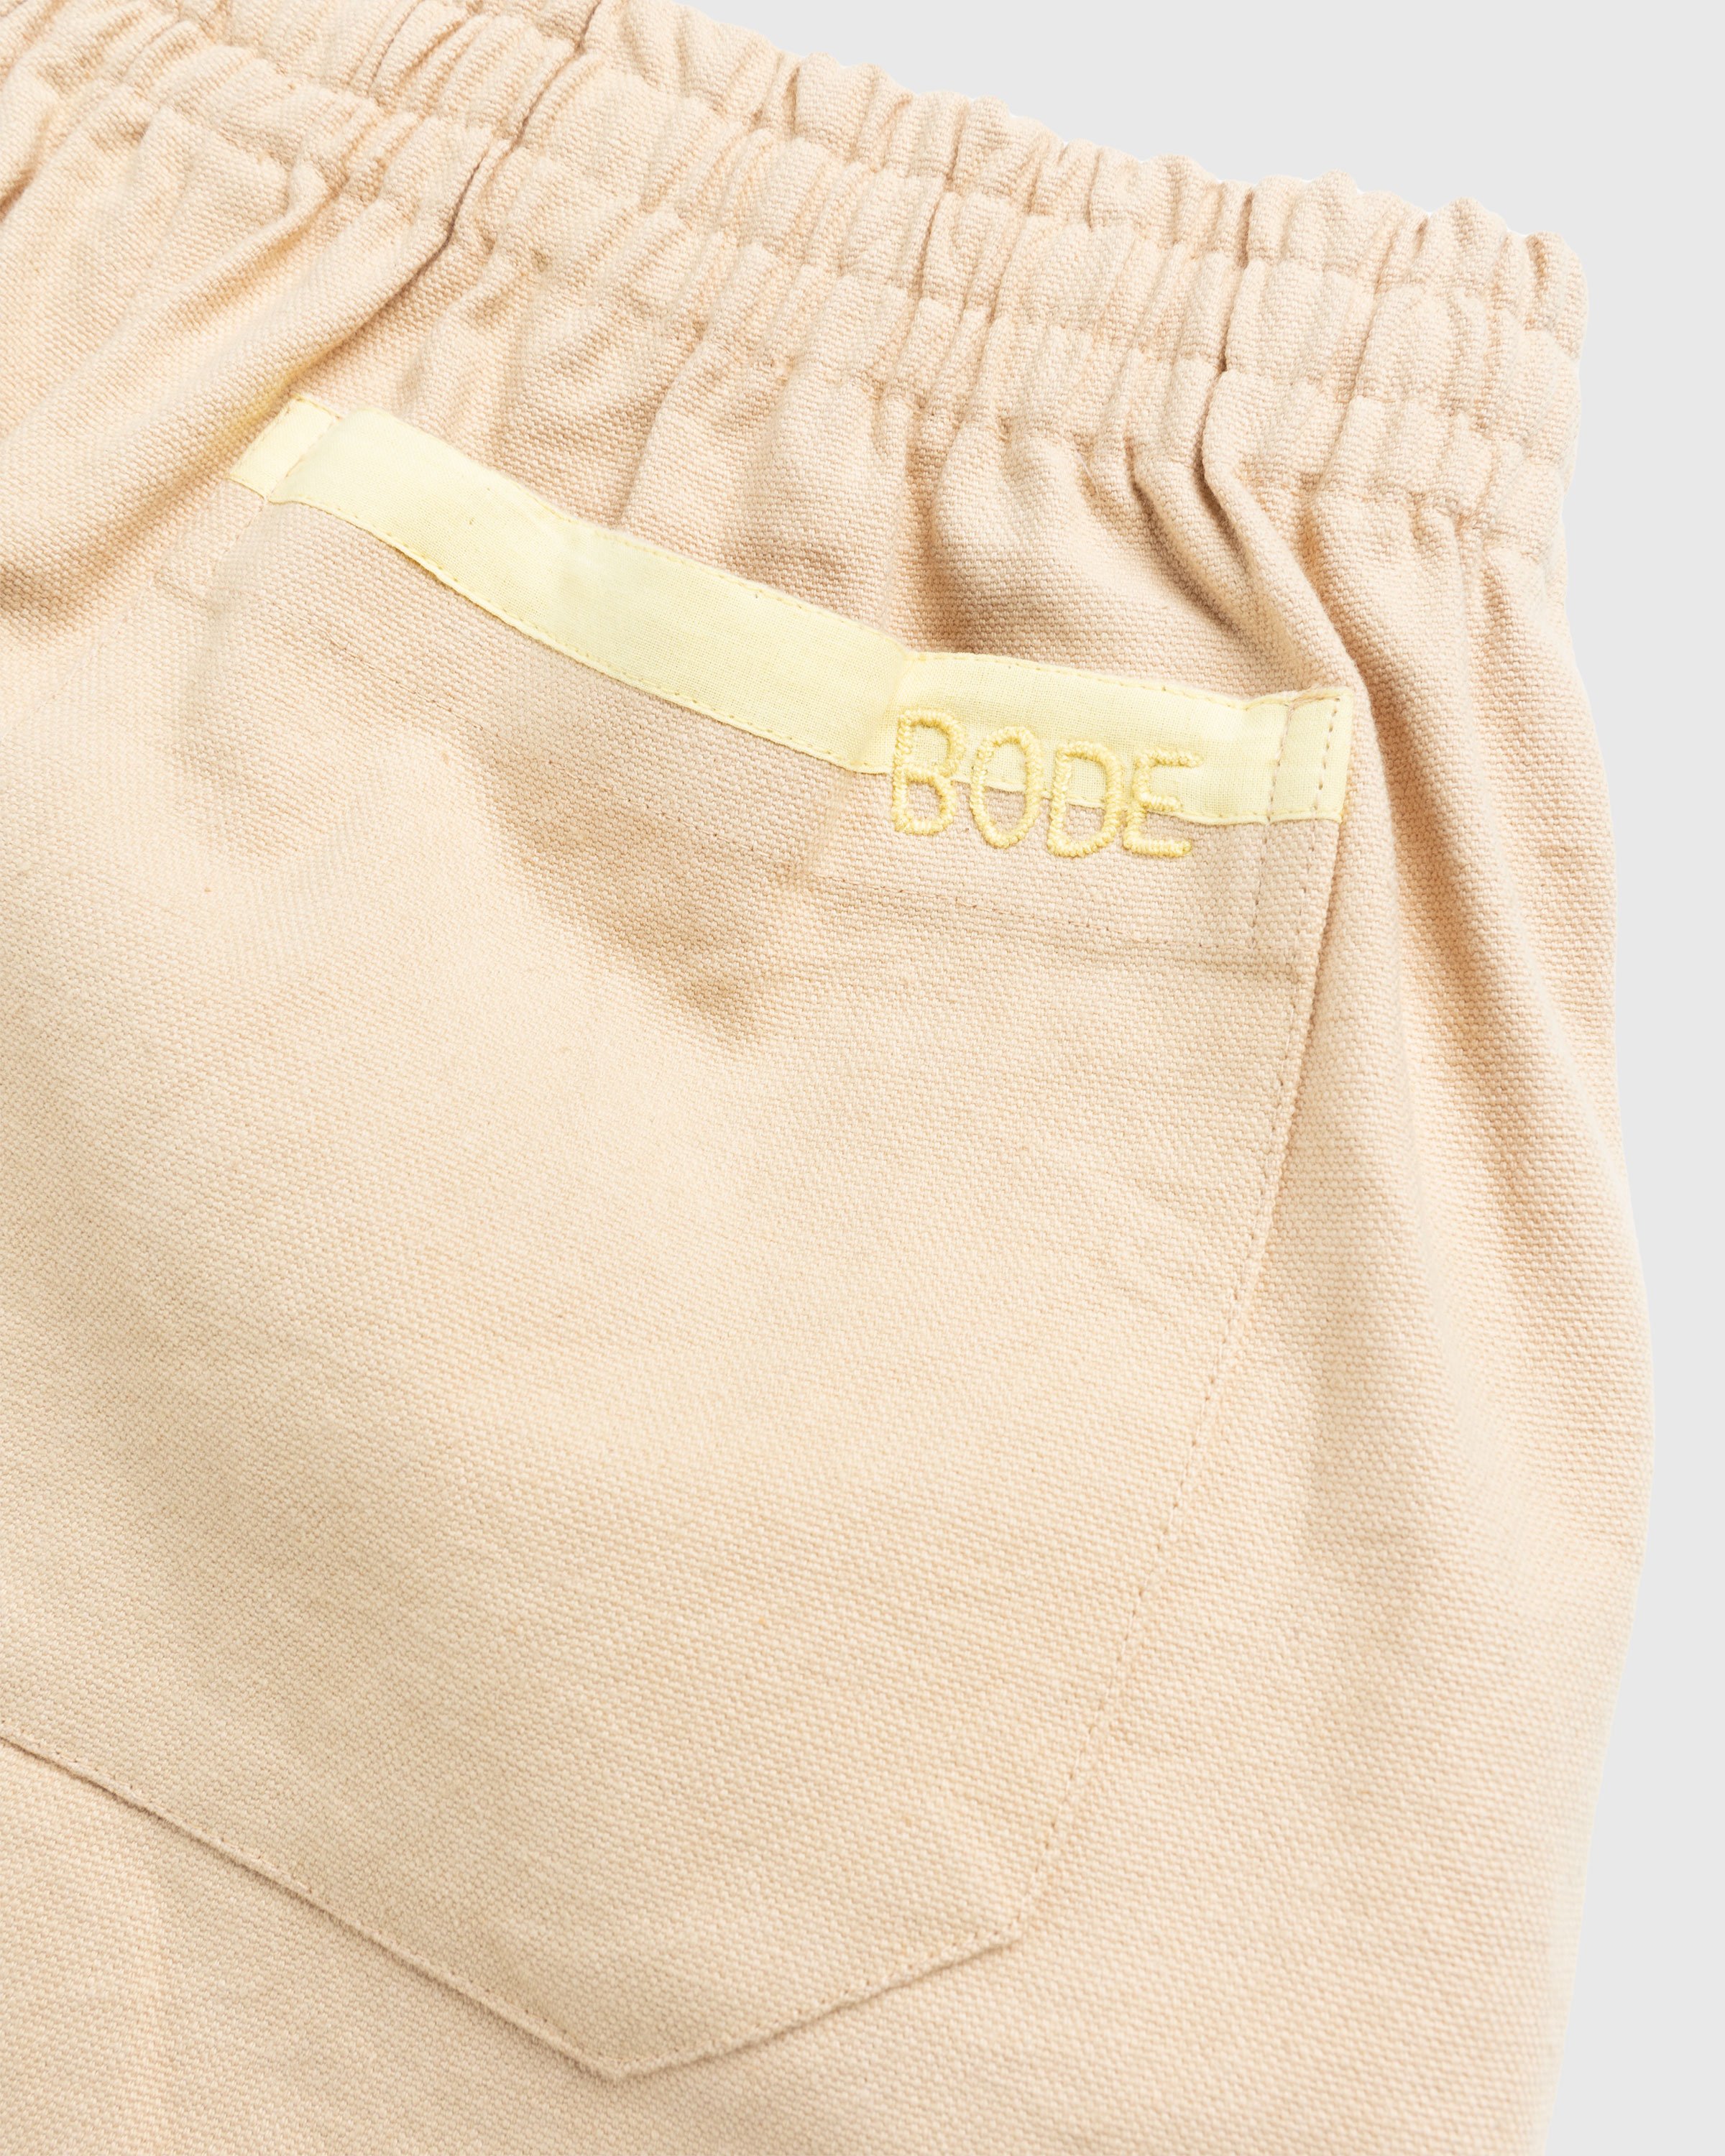 Bode - Ship Applique Shorts Tan - Clothing - Beige - Image 3